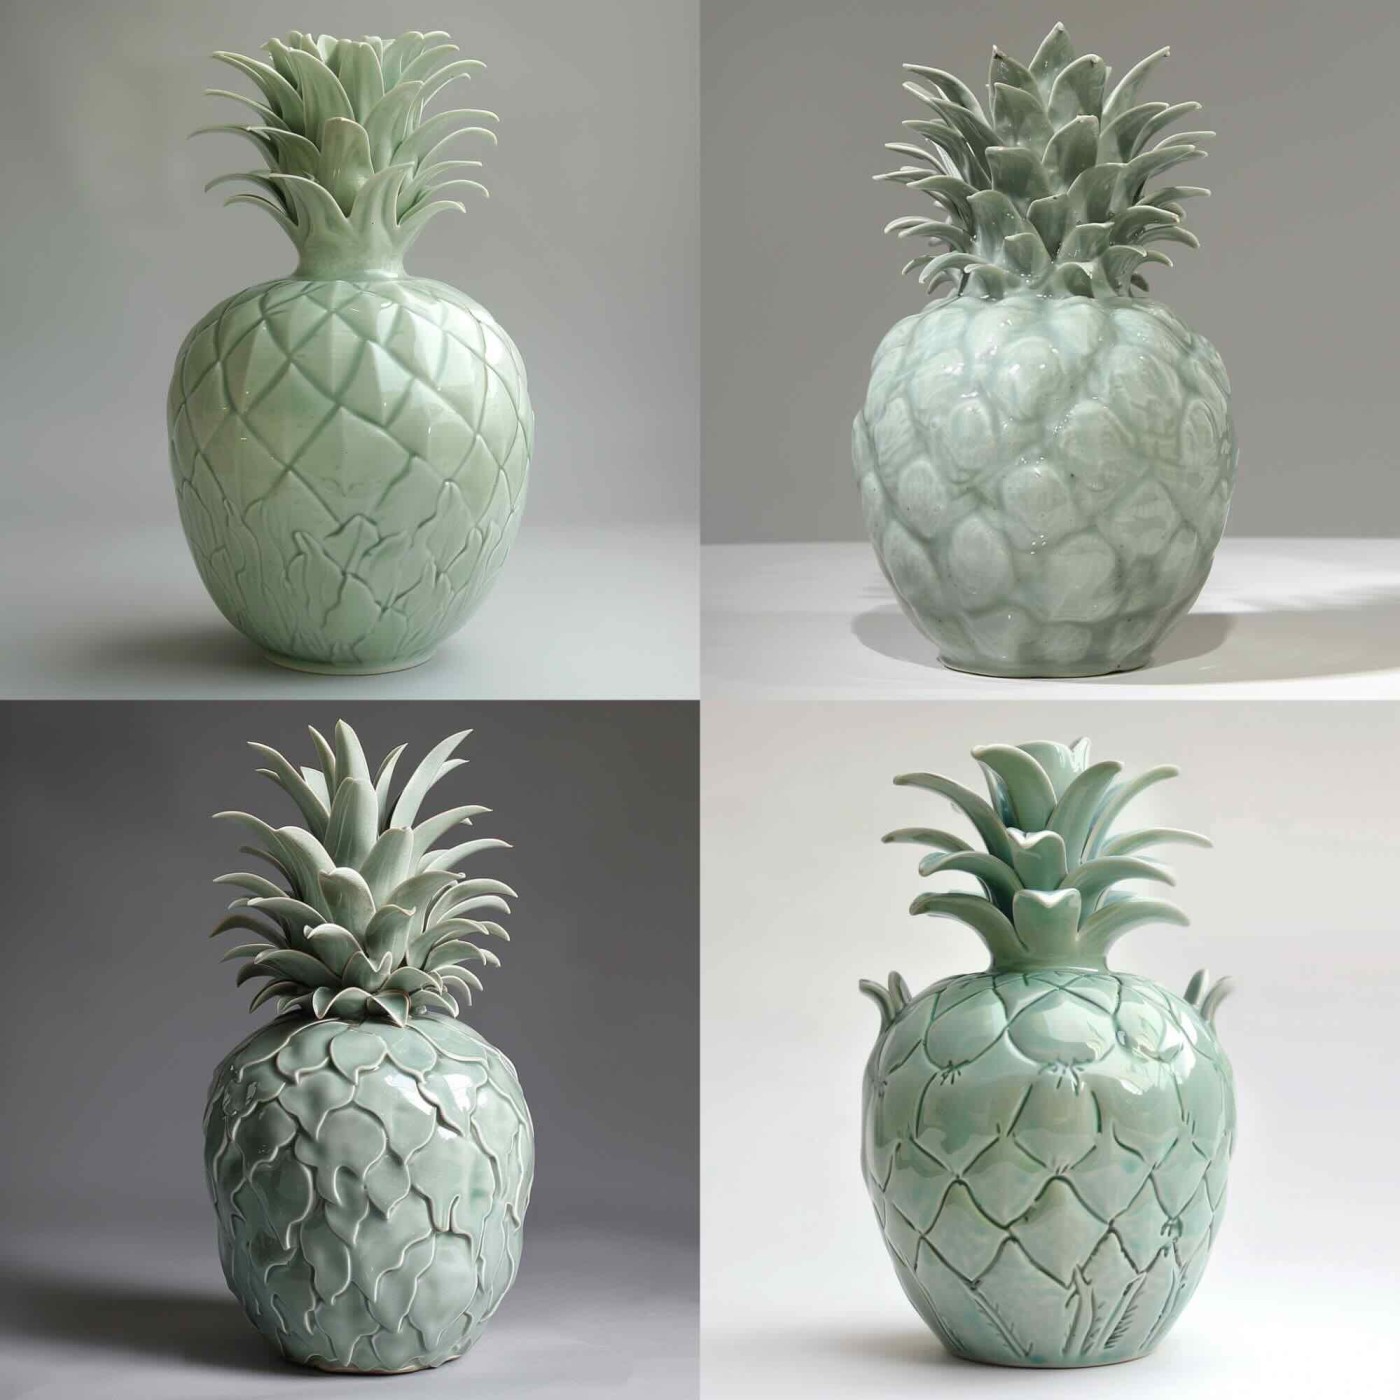 A pineapple, celadon porcelain